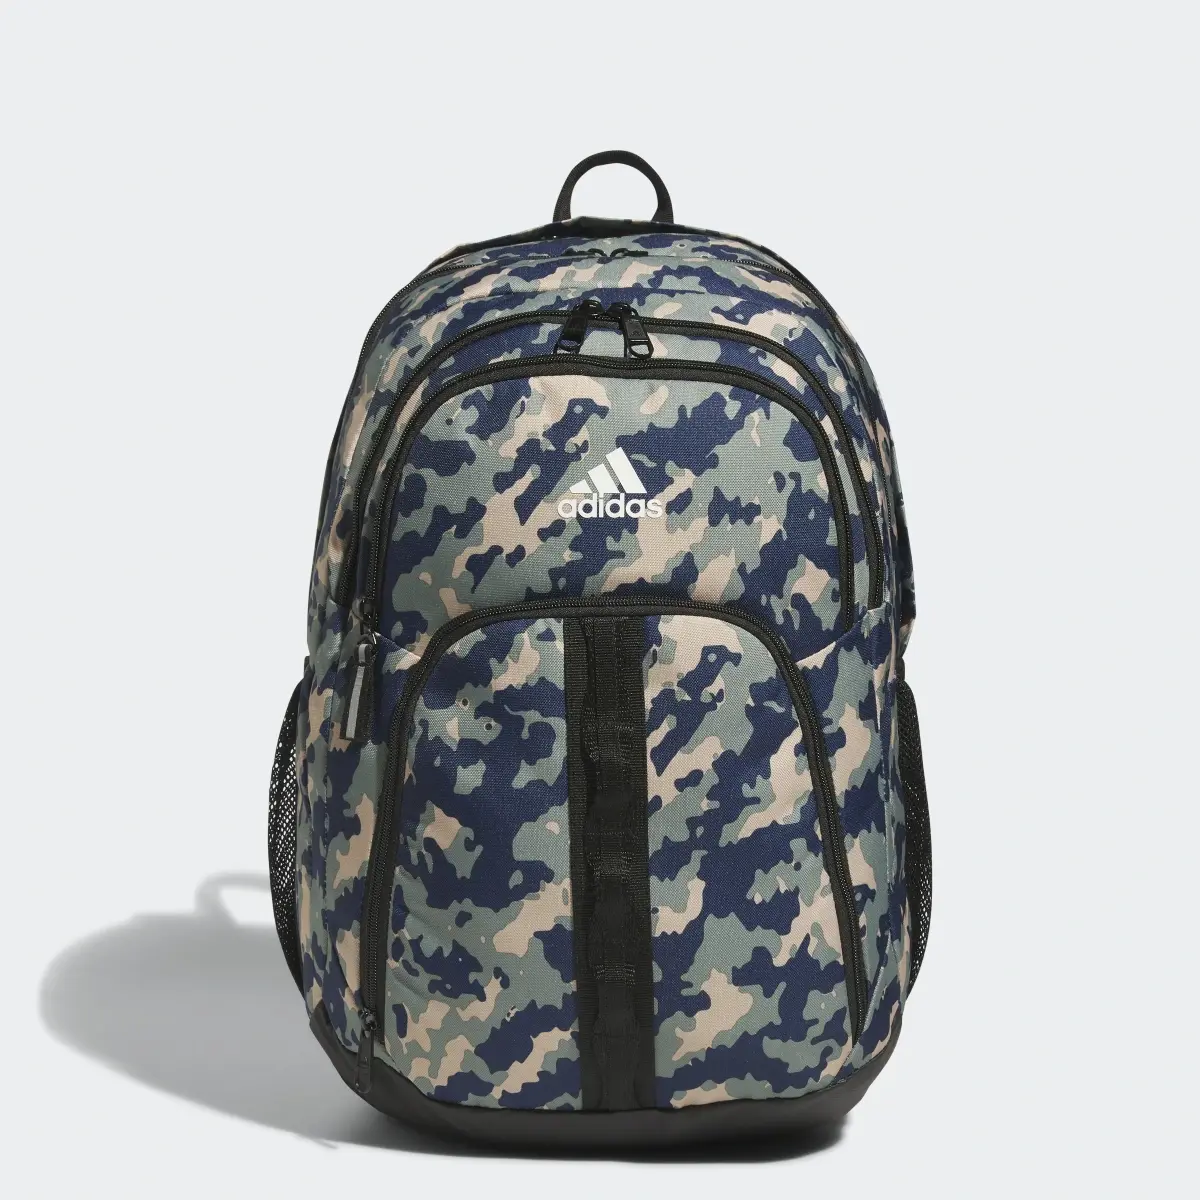 Adidas Prime Backpack. 1